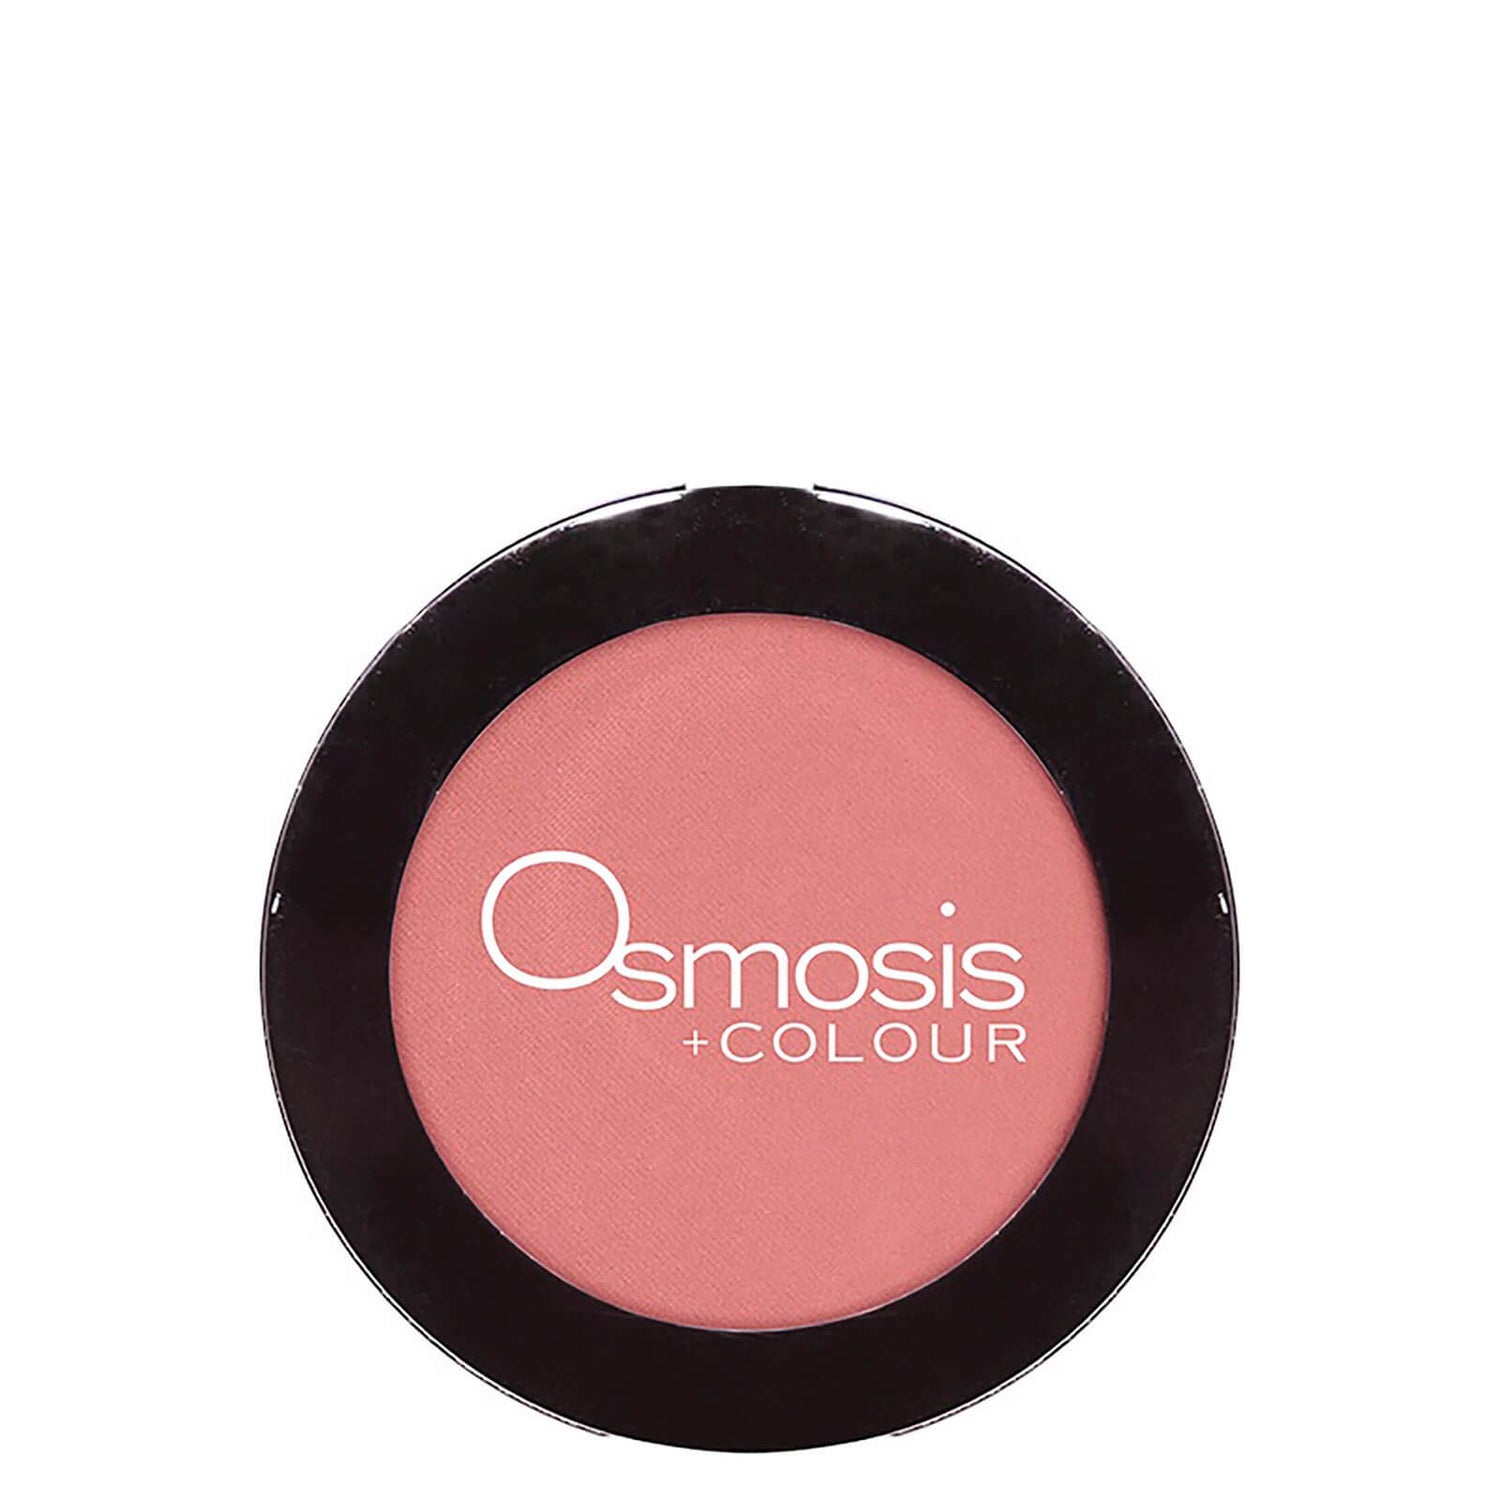 Osmosis +Beauty Blush (0.11 oz.)